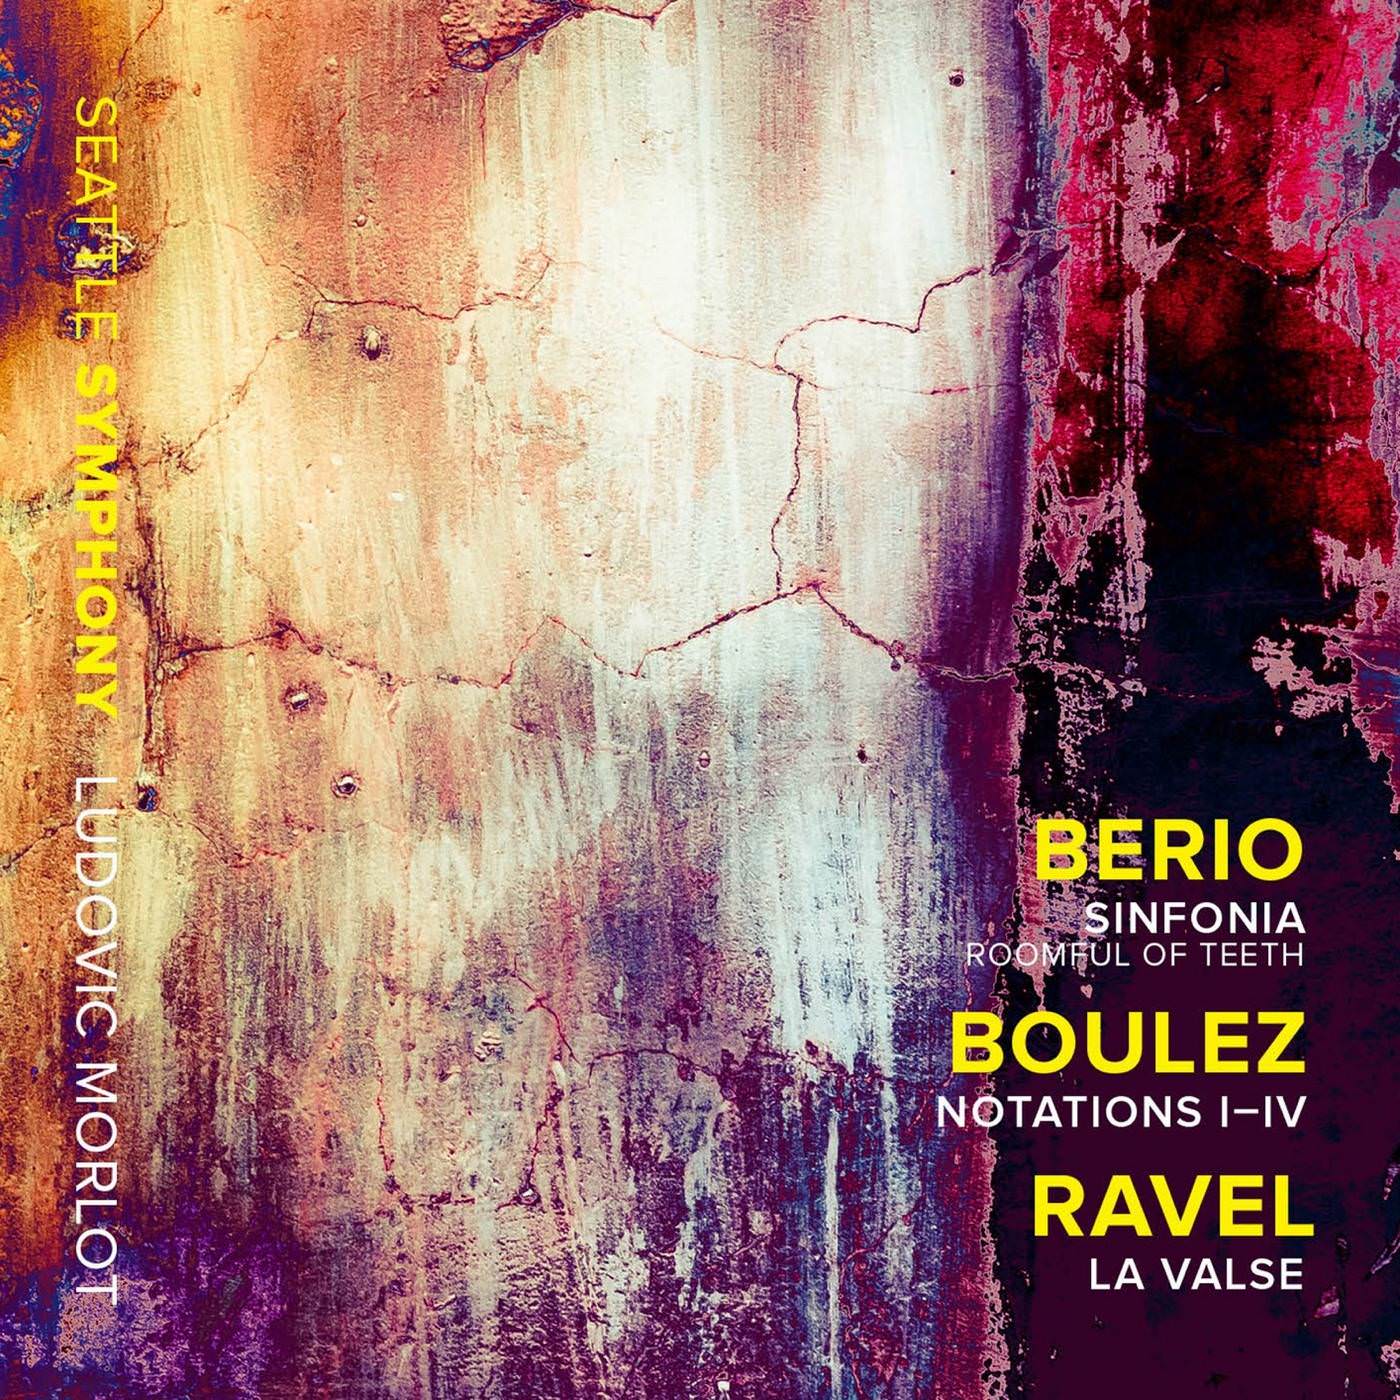 Seattle Symphony Orchestra, Ludovic Morlot – Berio: Sinfonia; Boulez: Notations I-IV; Ravel: La valse, M. 72 (2018) [FLAC 24bit/96kHz]